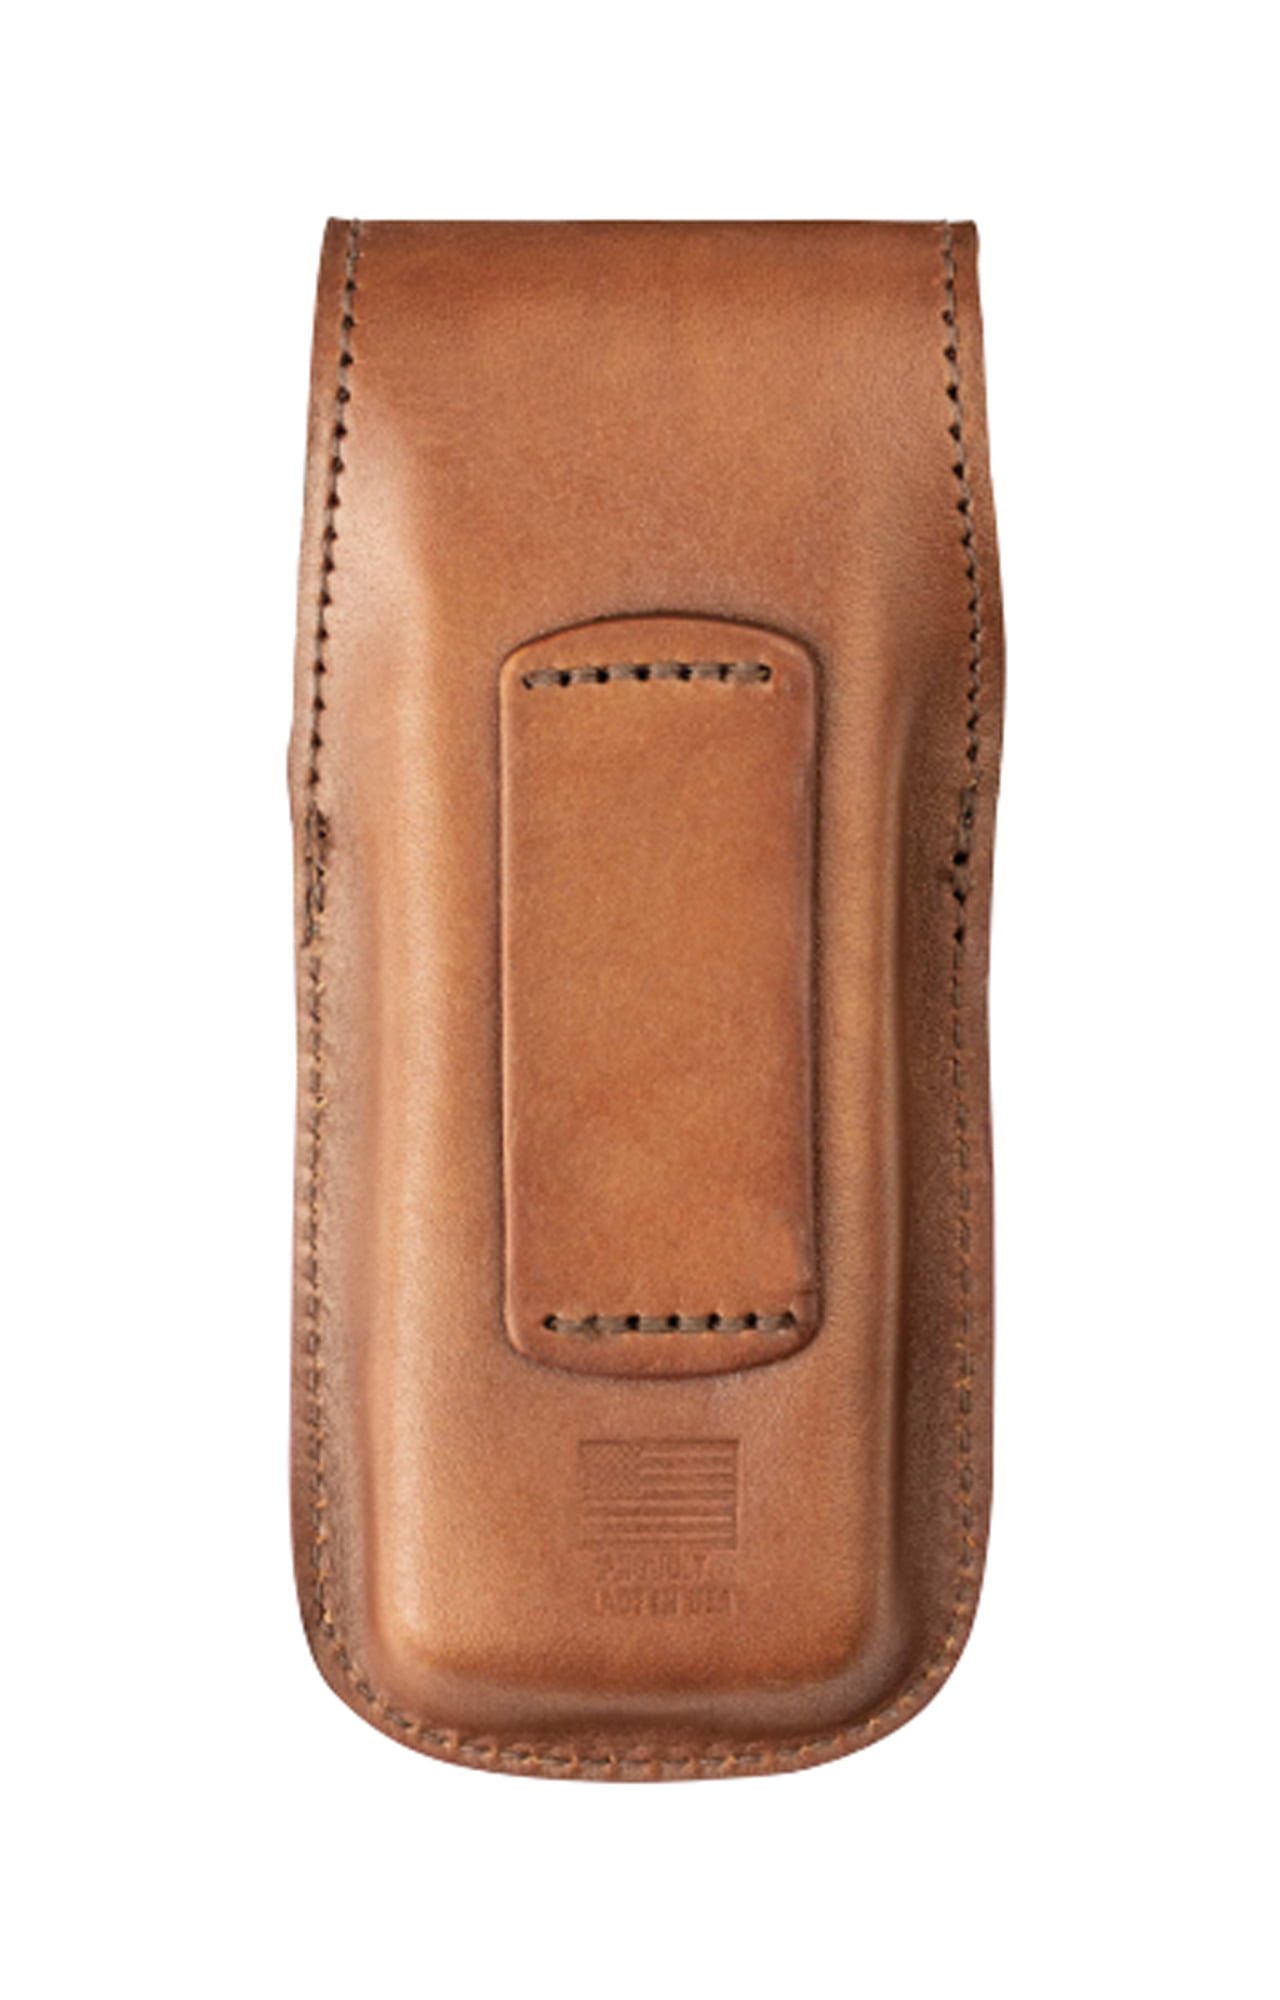 Wingman Sidekick LEATHERMAN Premium Leather SHEATH 4" #931016 Case for Wave 